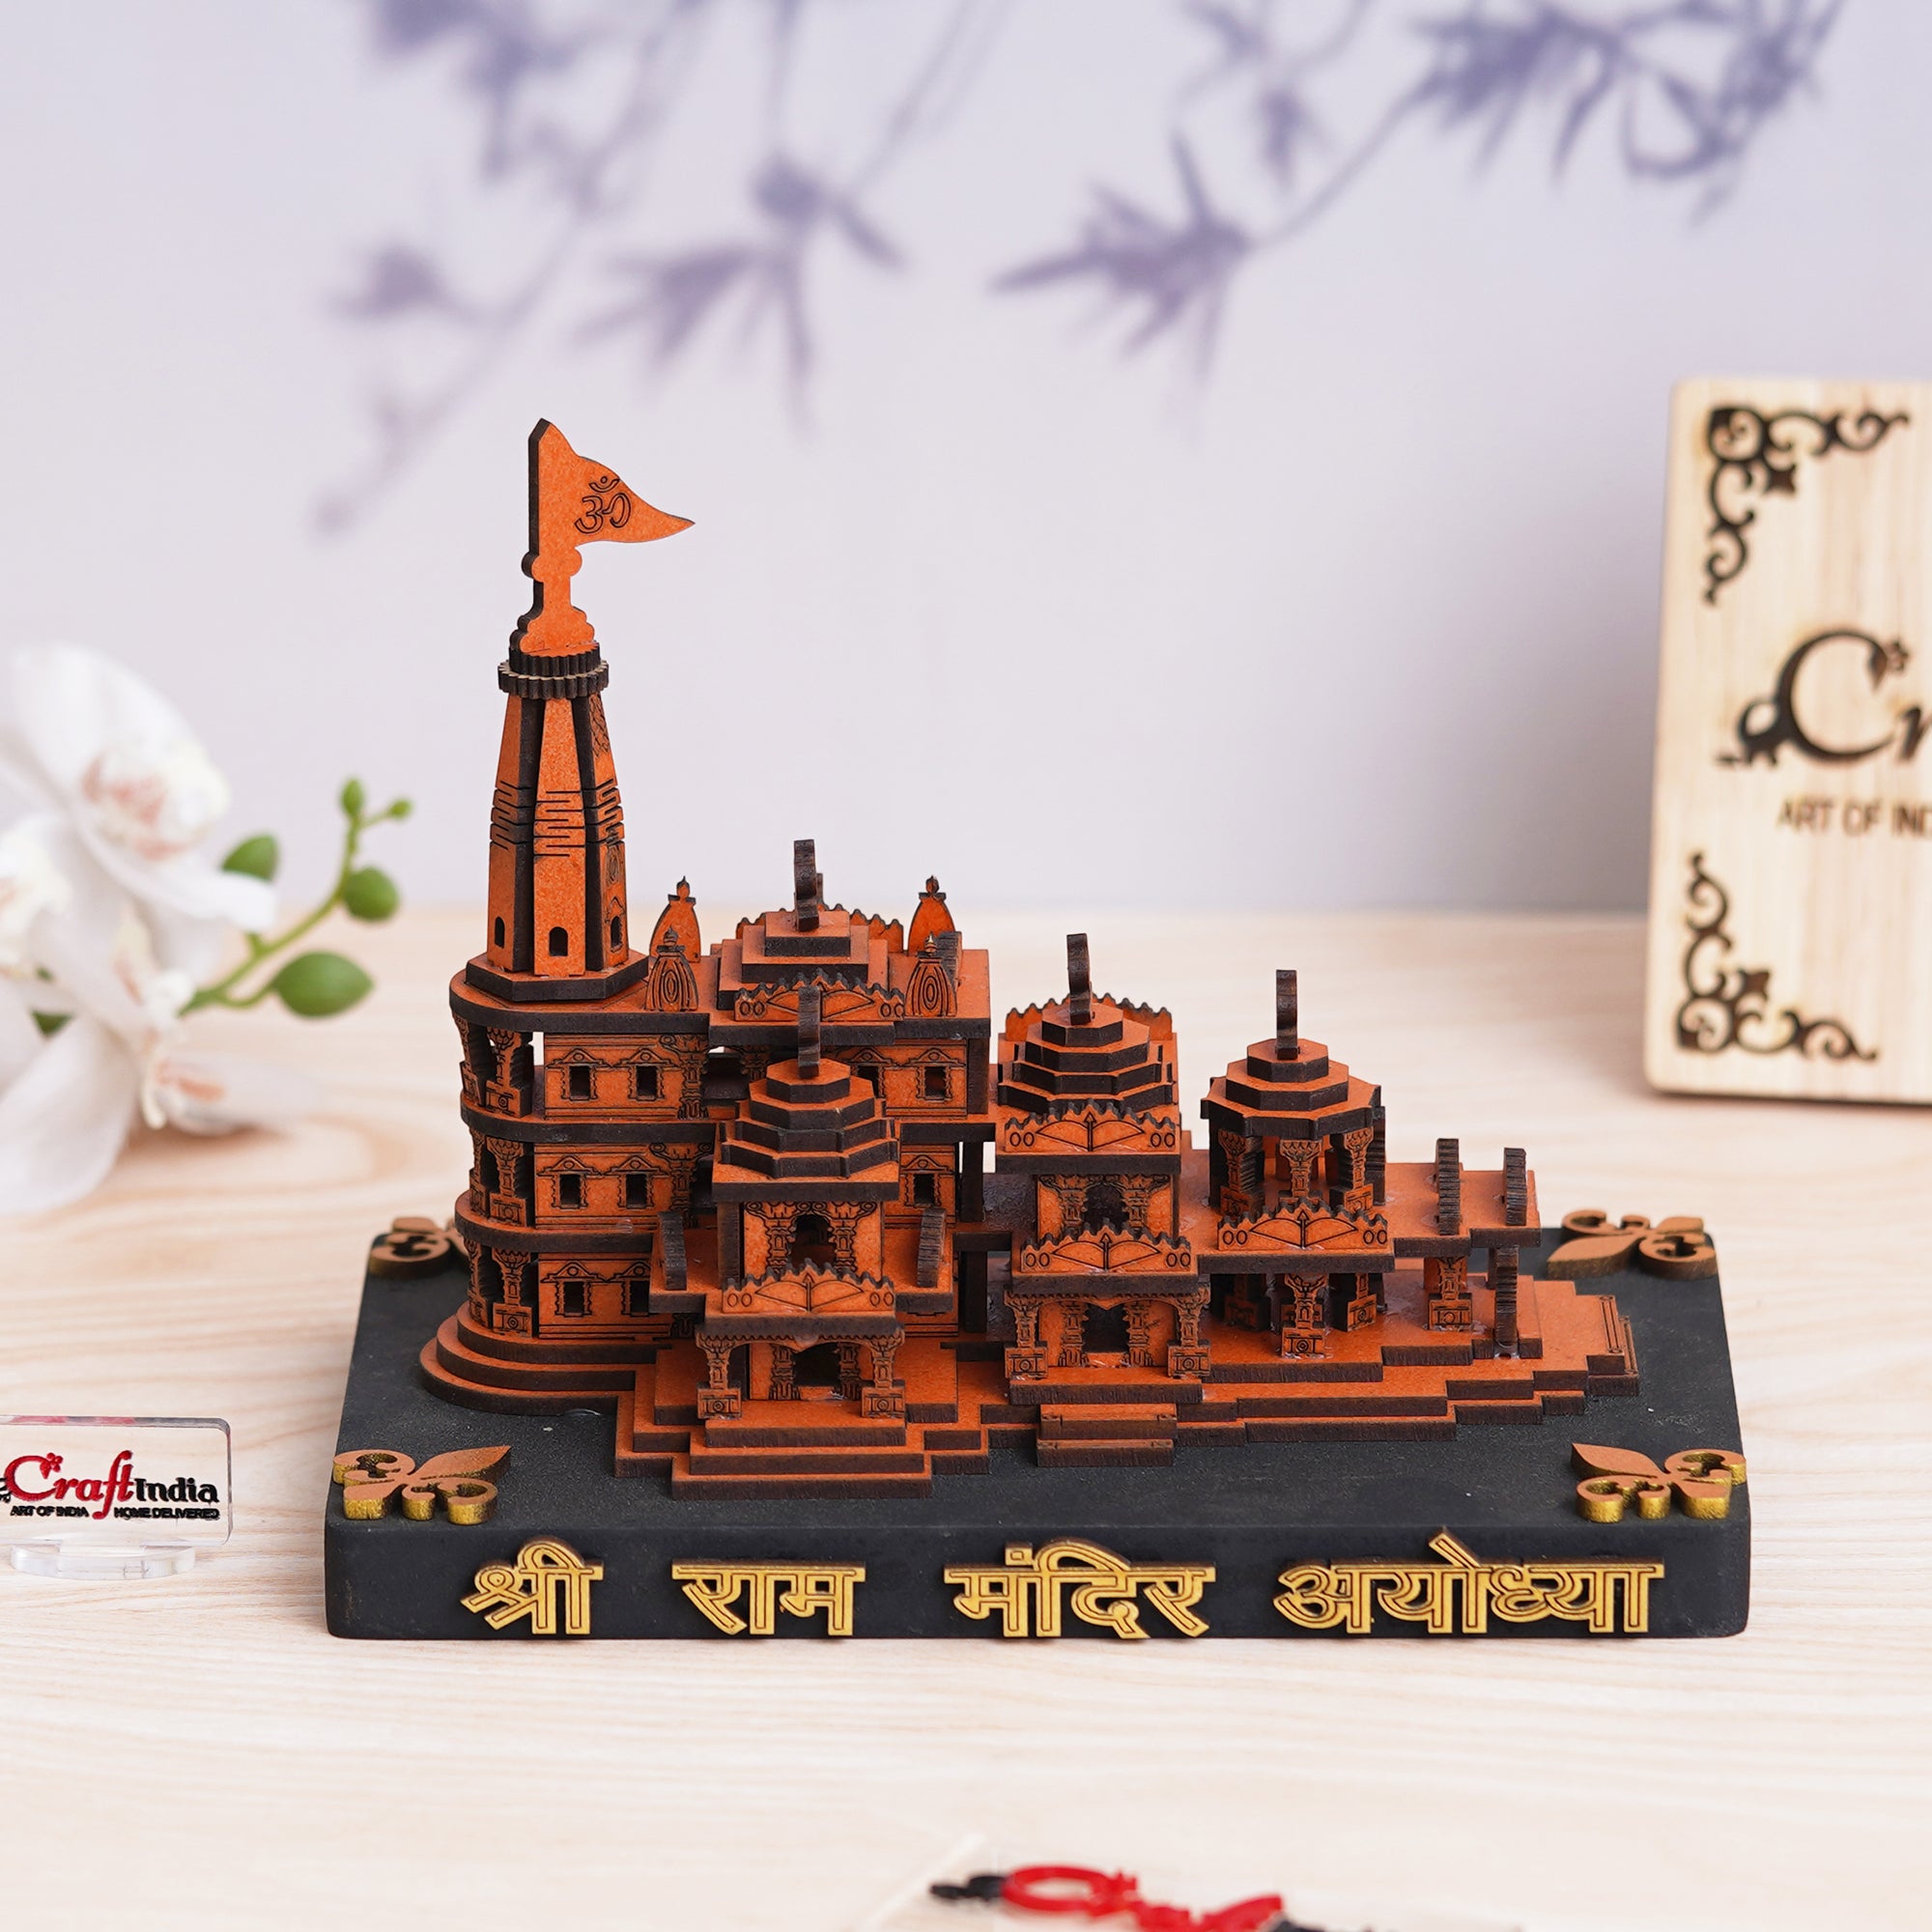 eCraftIndia Shri Ram Mandir Ayodhya Model - Wooden MDF Craftsmanship Authentic Designer Temple - Ideal for Home Temple, Decor, and Spiritual Gifting (Orange, Gold)